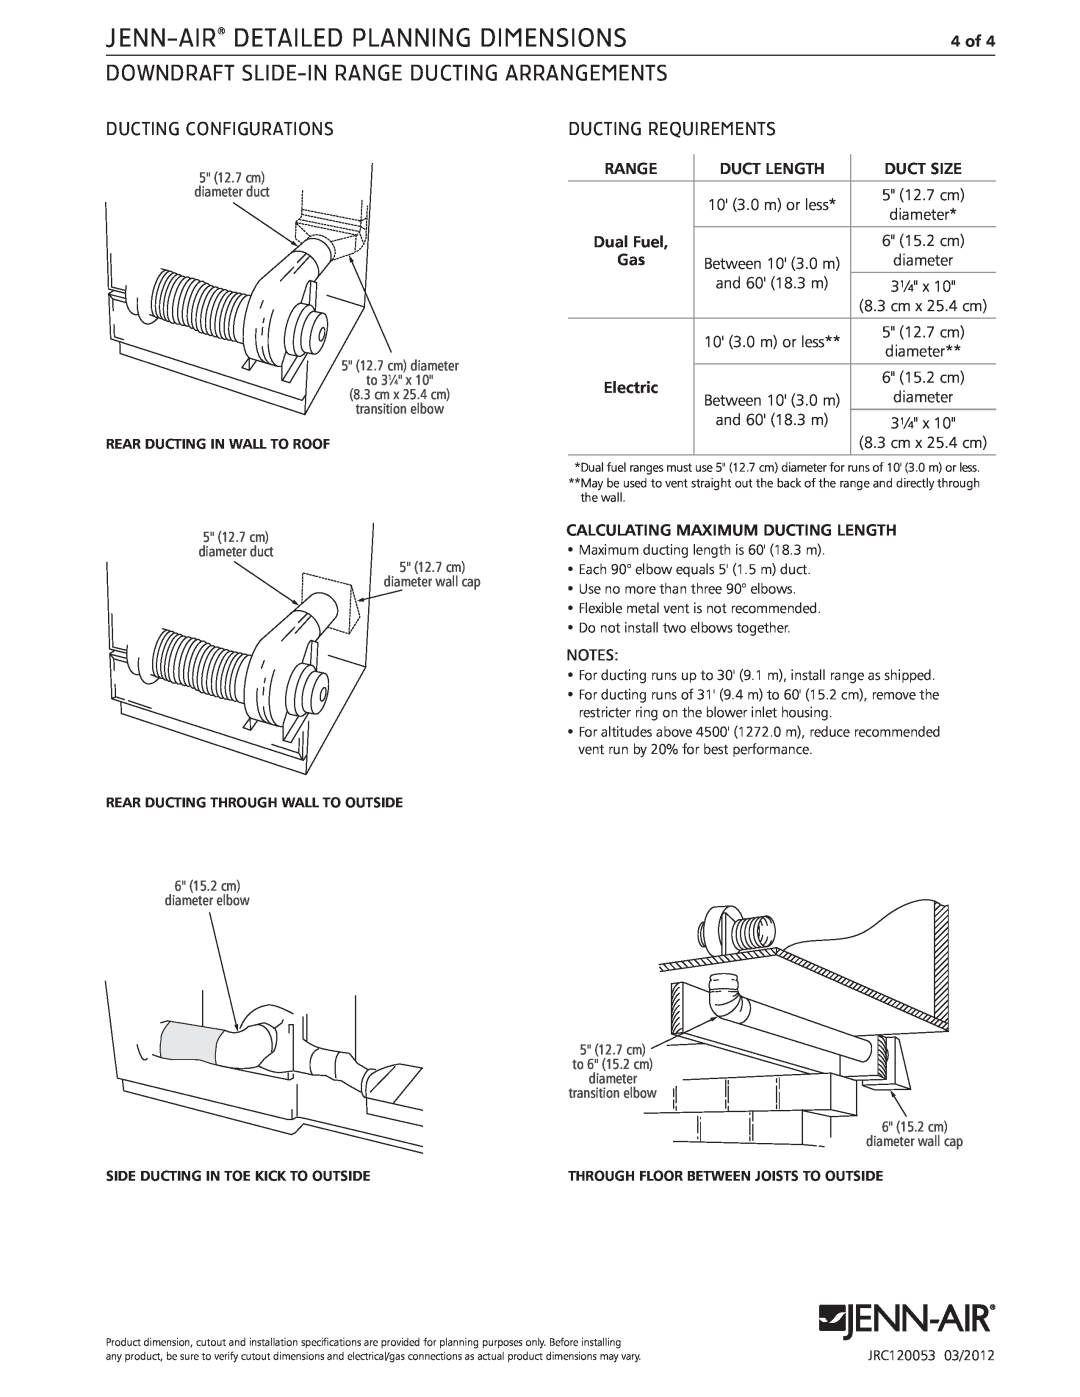 Jenn-Air JES9800CA dimensions Downdraft Slide-Inrange Ducting Arrangements, Ducting Configurations, Ducting Requirements 